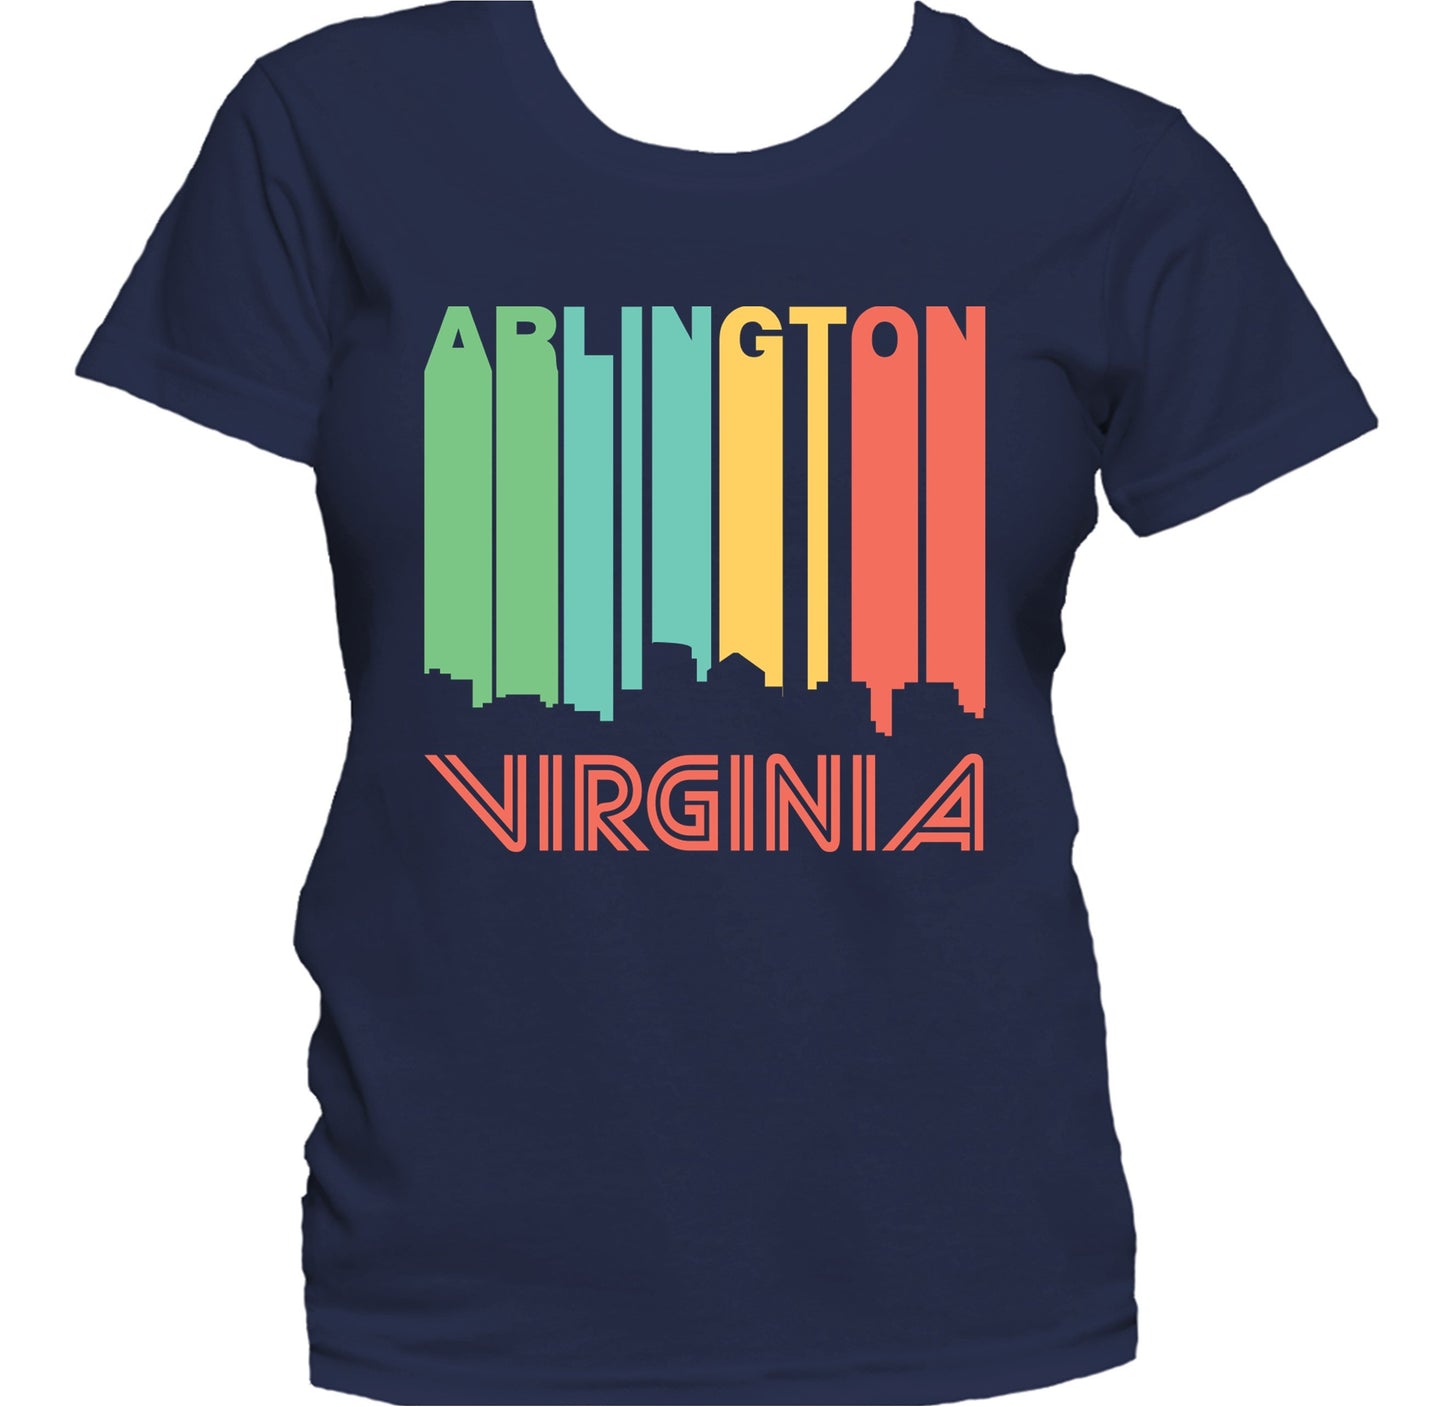 Retro 1970's Style Arlington Virginia Skyline Women's T-Shirt